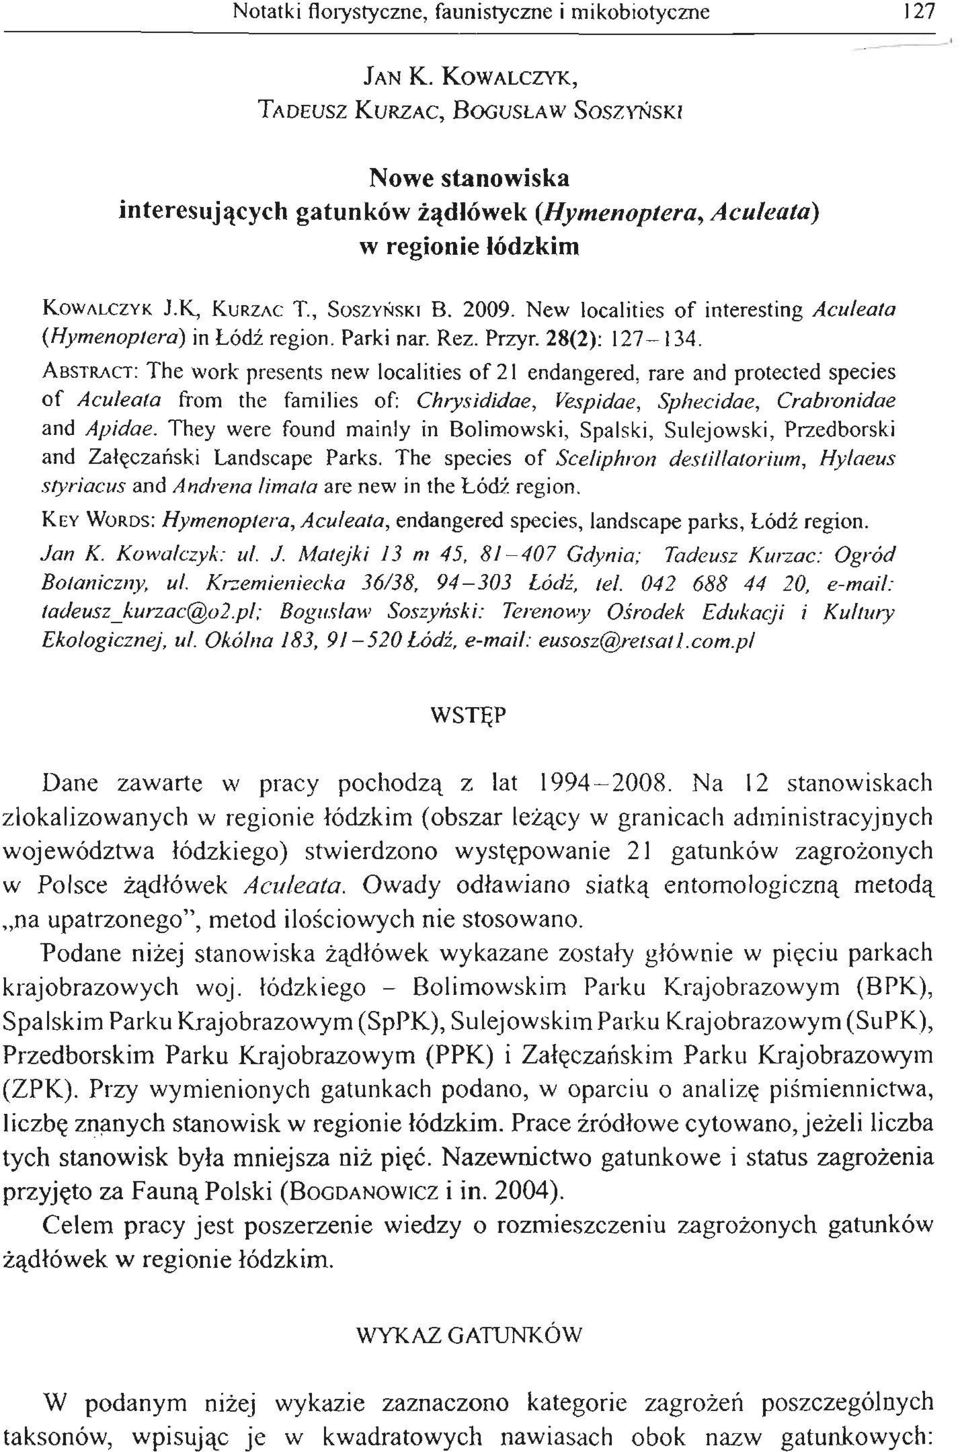 New localiti es of interesring Aculeala (HymenopIera) in Łód ź region. Parki nar. Rez. Przyr. 28(2) : 127-134.